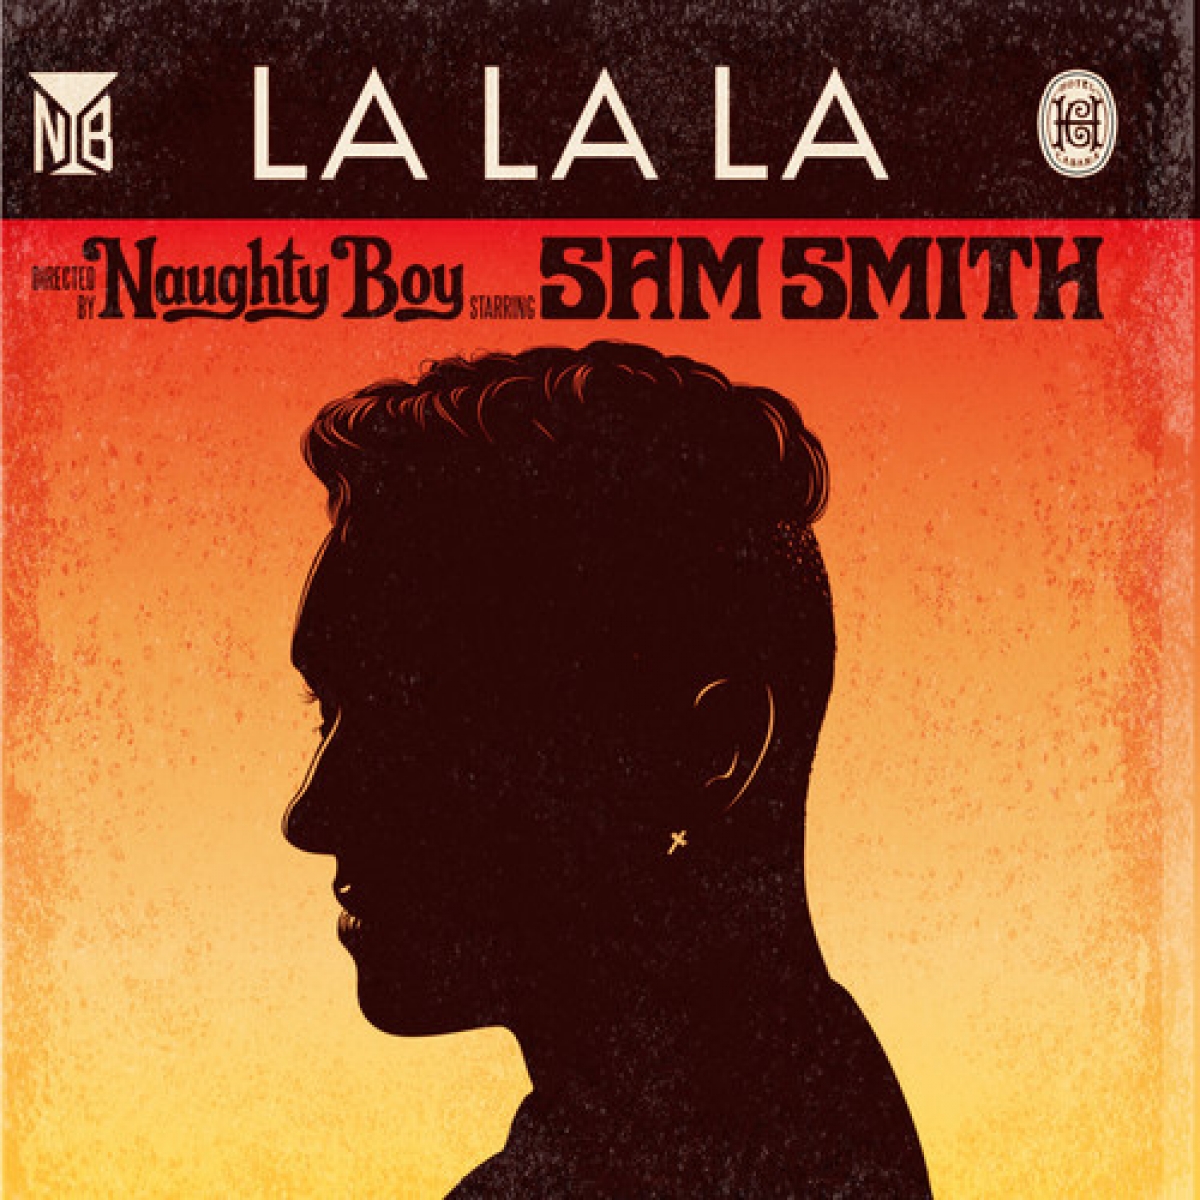 NAUGHTY BOY - La La La (feat. Sam Smith)